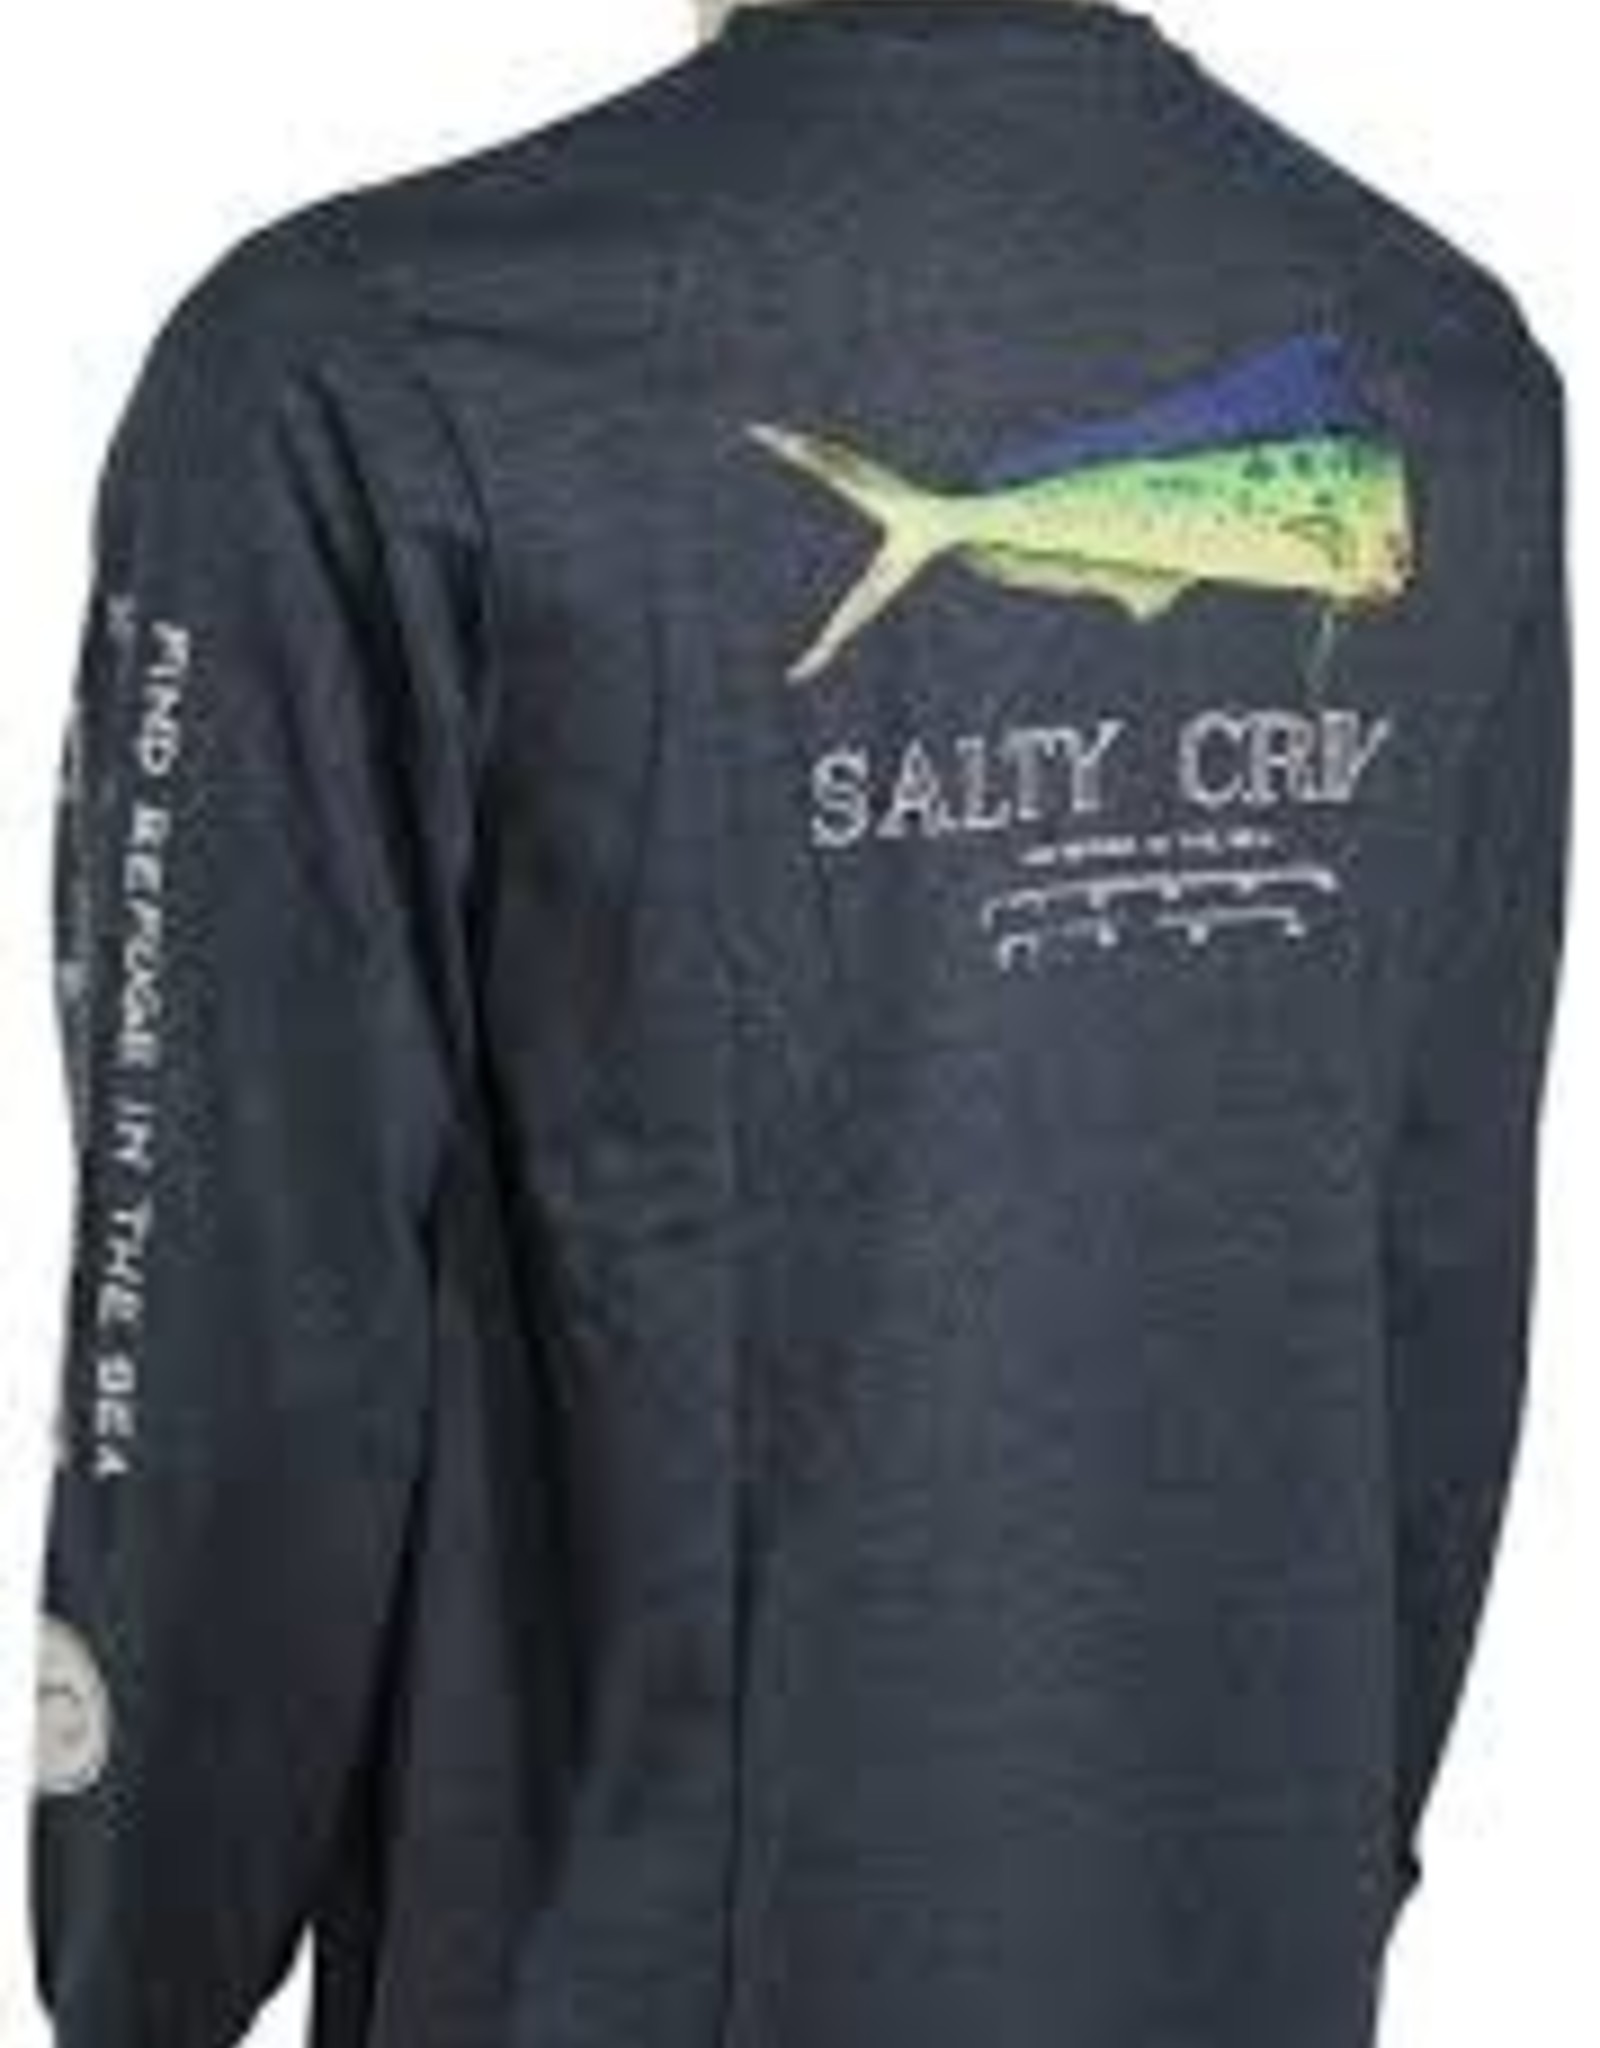 salty crew Salty Crew Angry Bull L/S tech Tee 20135024